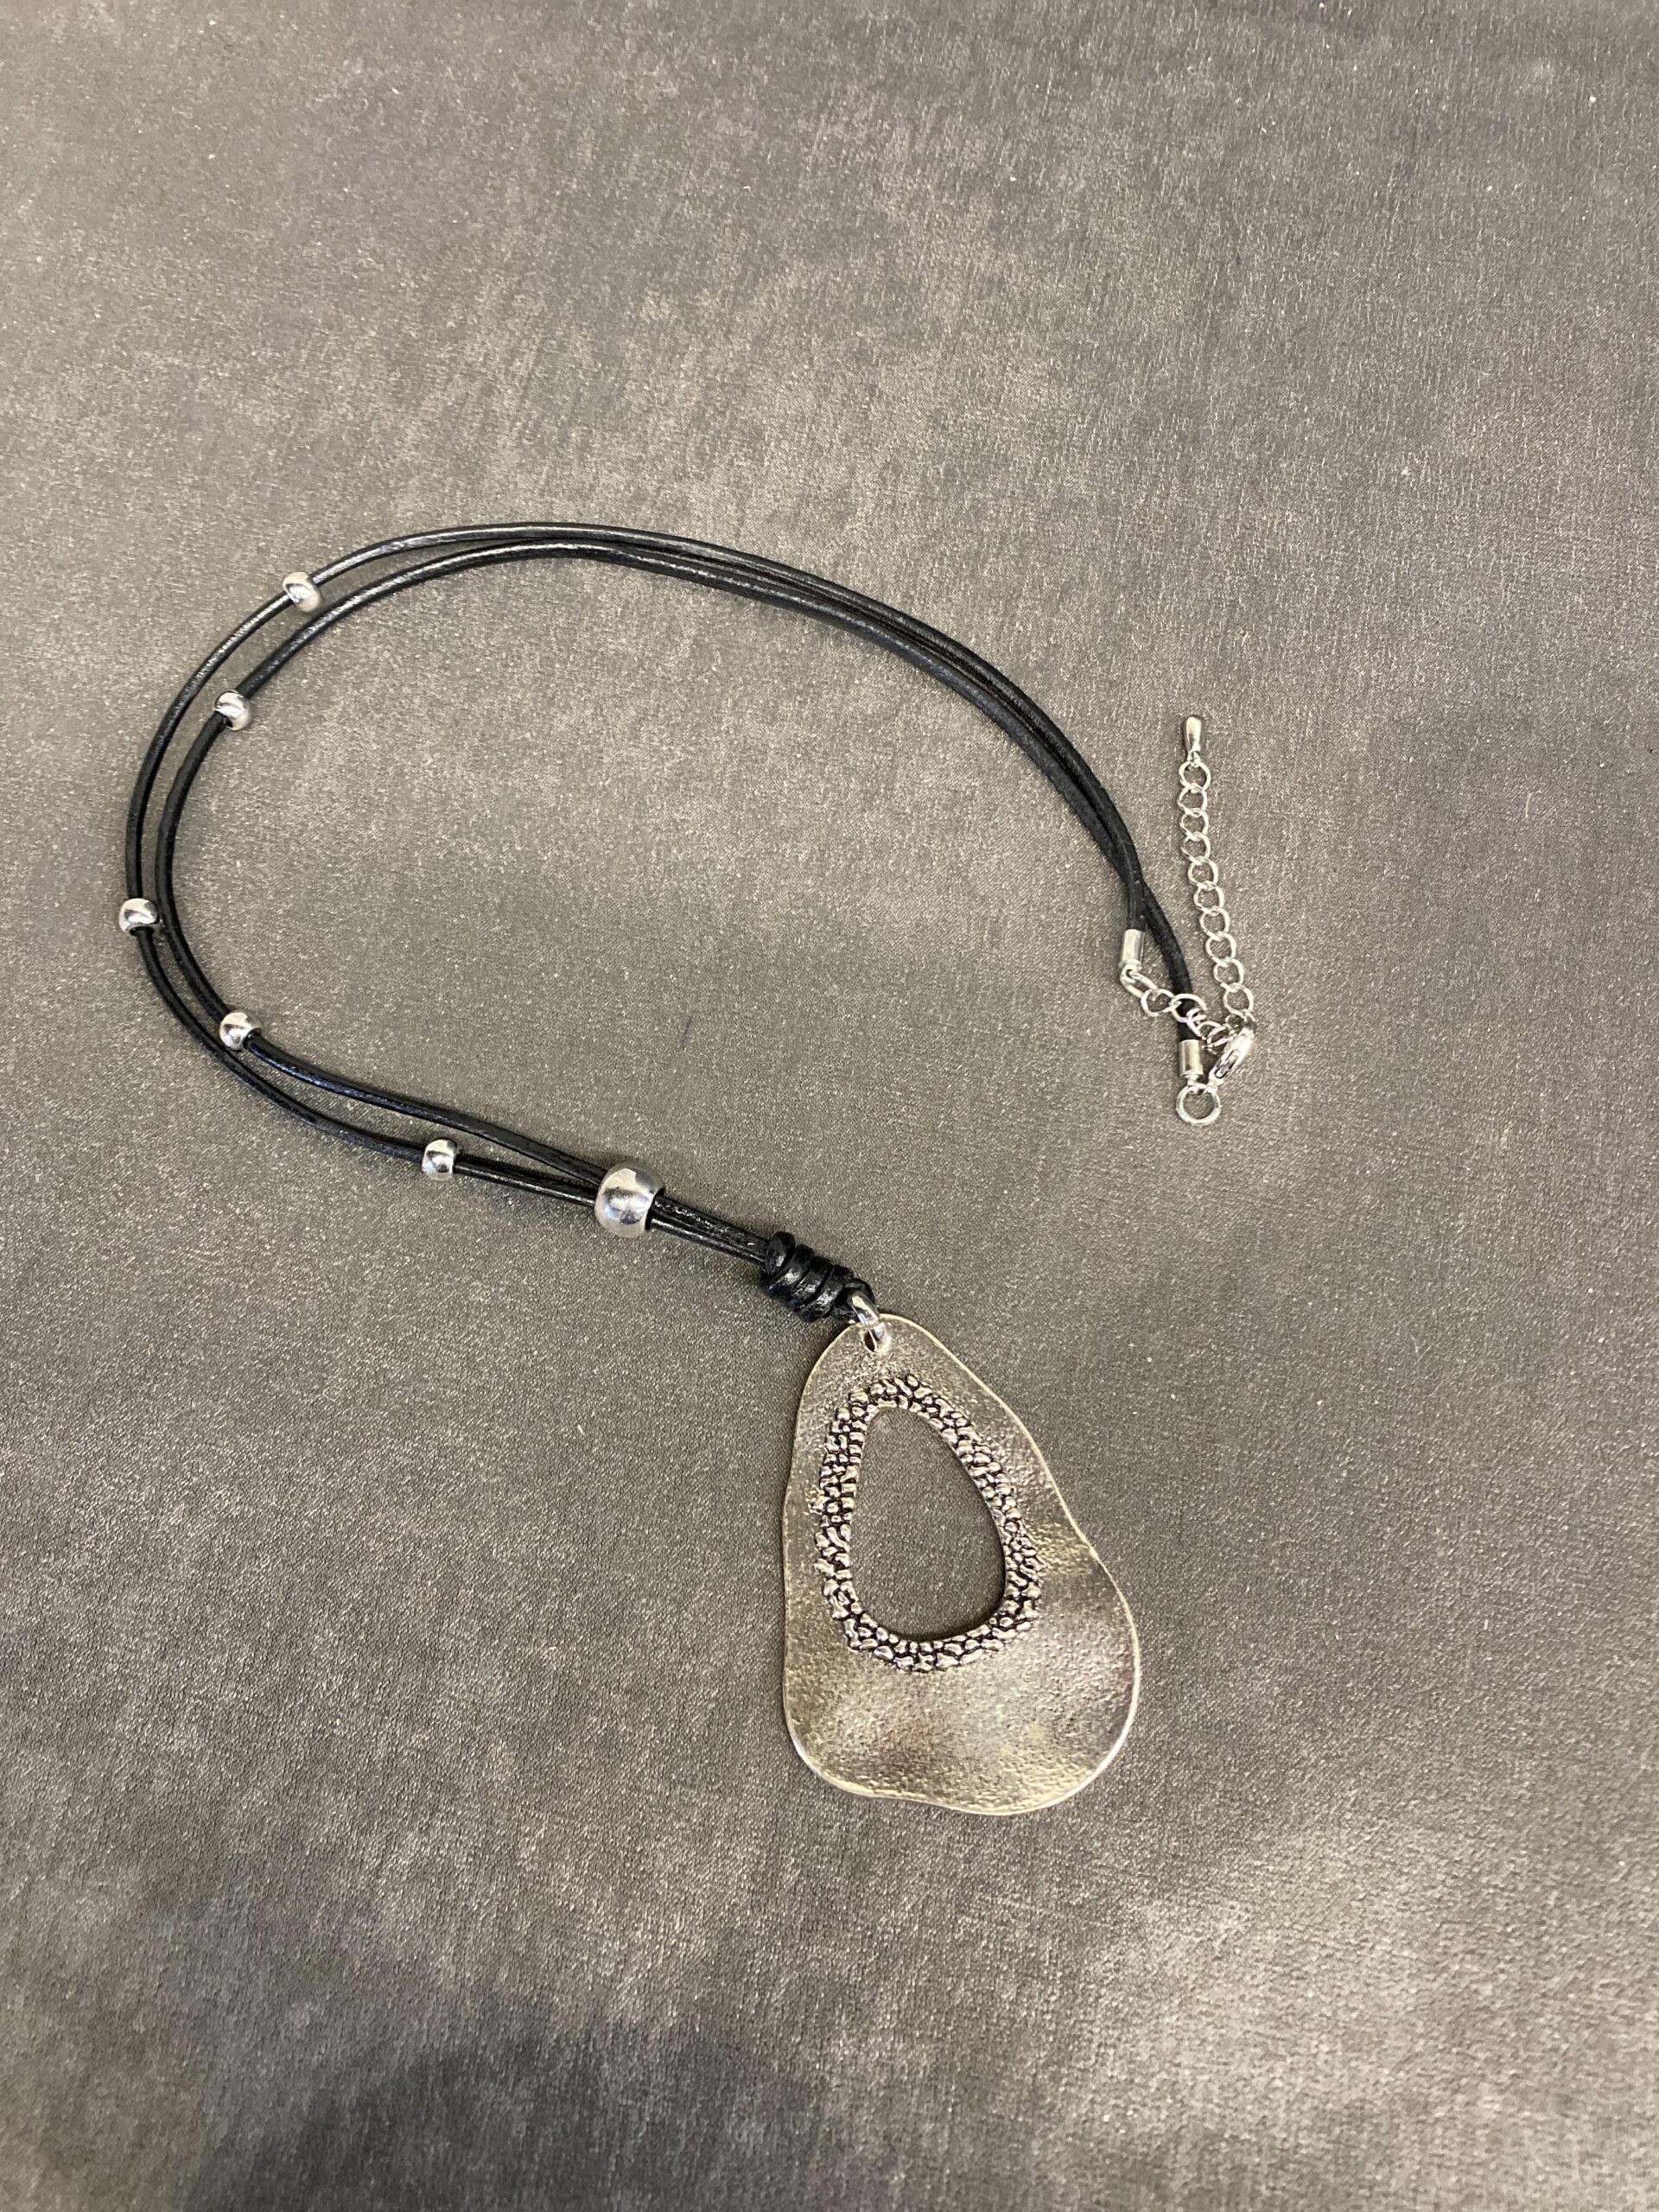 Long Necklace – Silver Tone Pendant